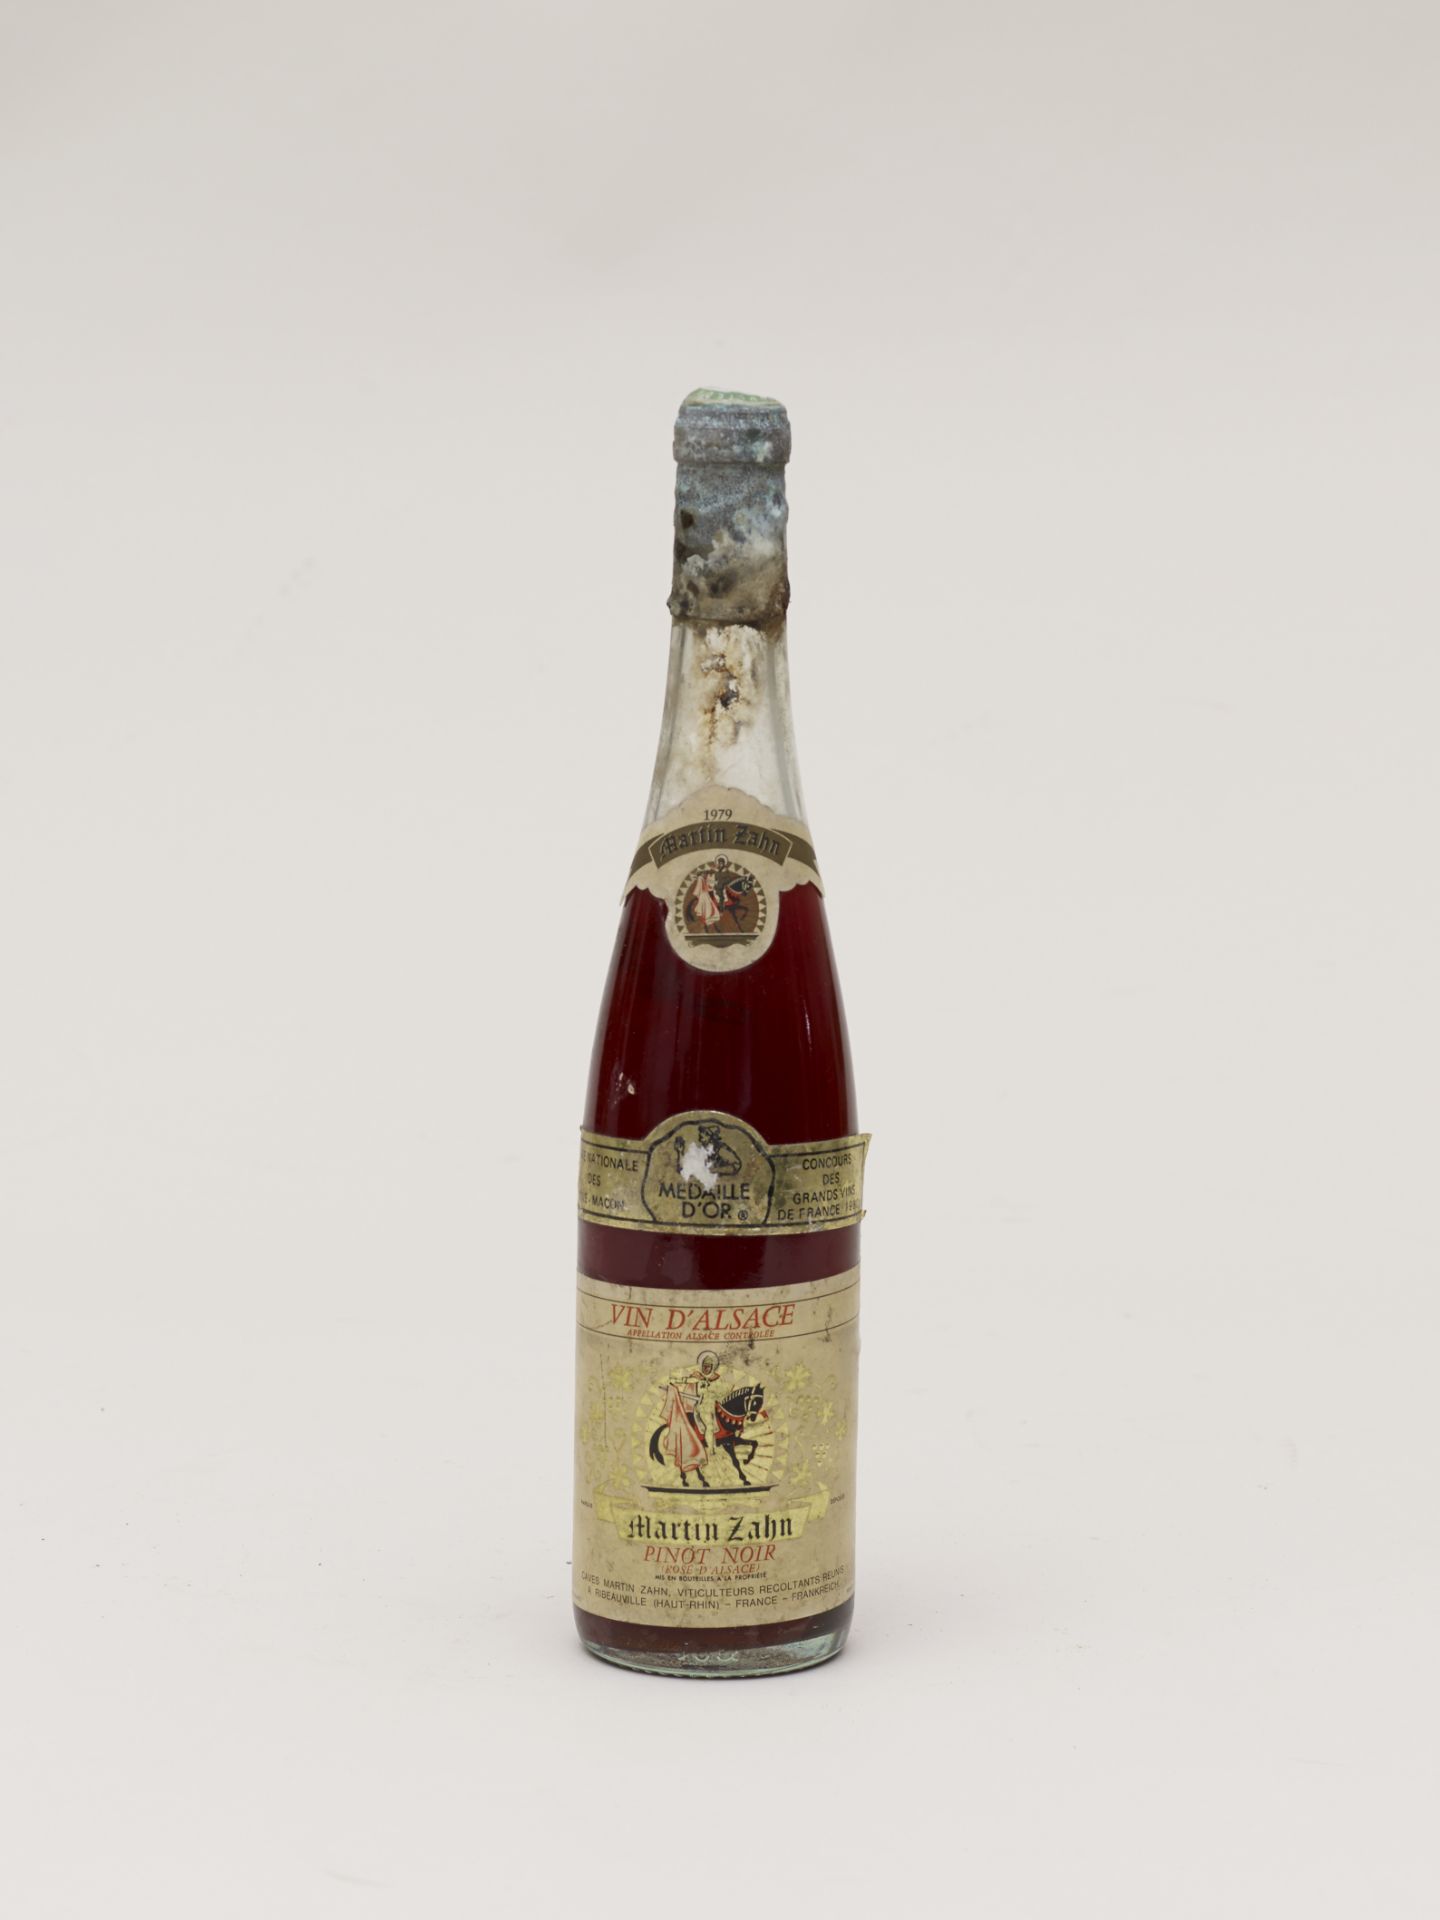 1 bouteille vin Alsace Pinot noir, 1979 - - 1 bottle Alsace Pinot Noir wine, 1979 -